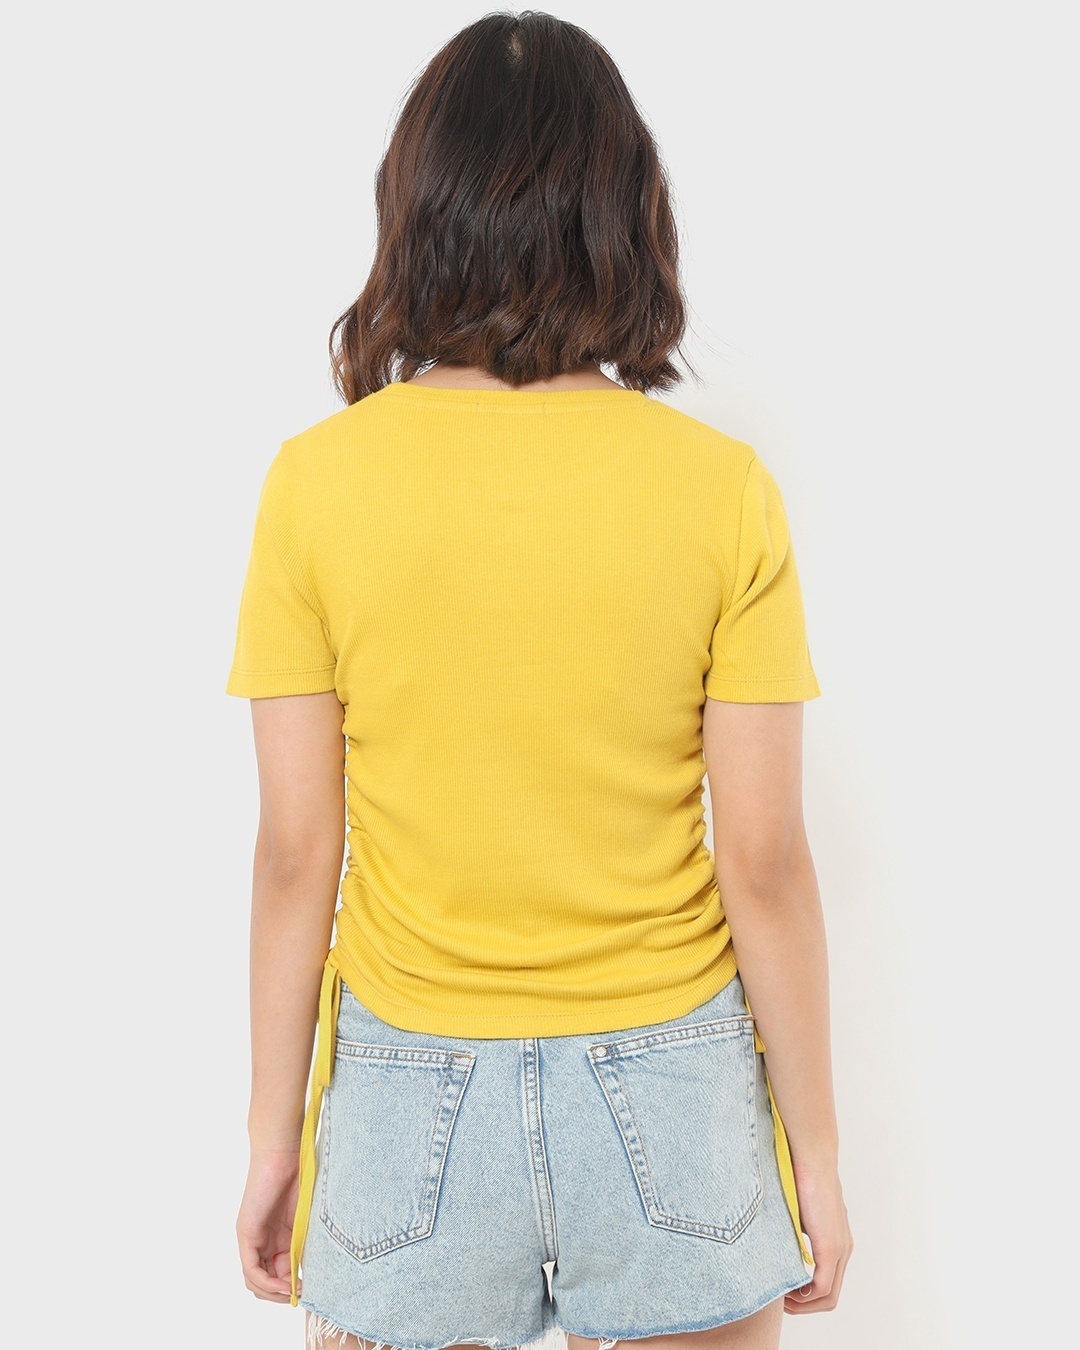 Shop Women's Yellow Size gather Slim Fit Top-Design